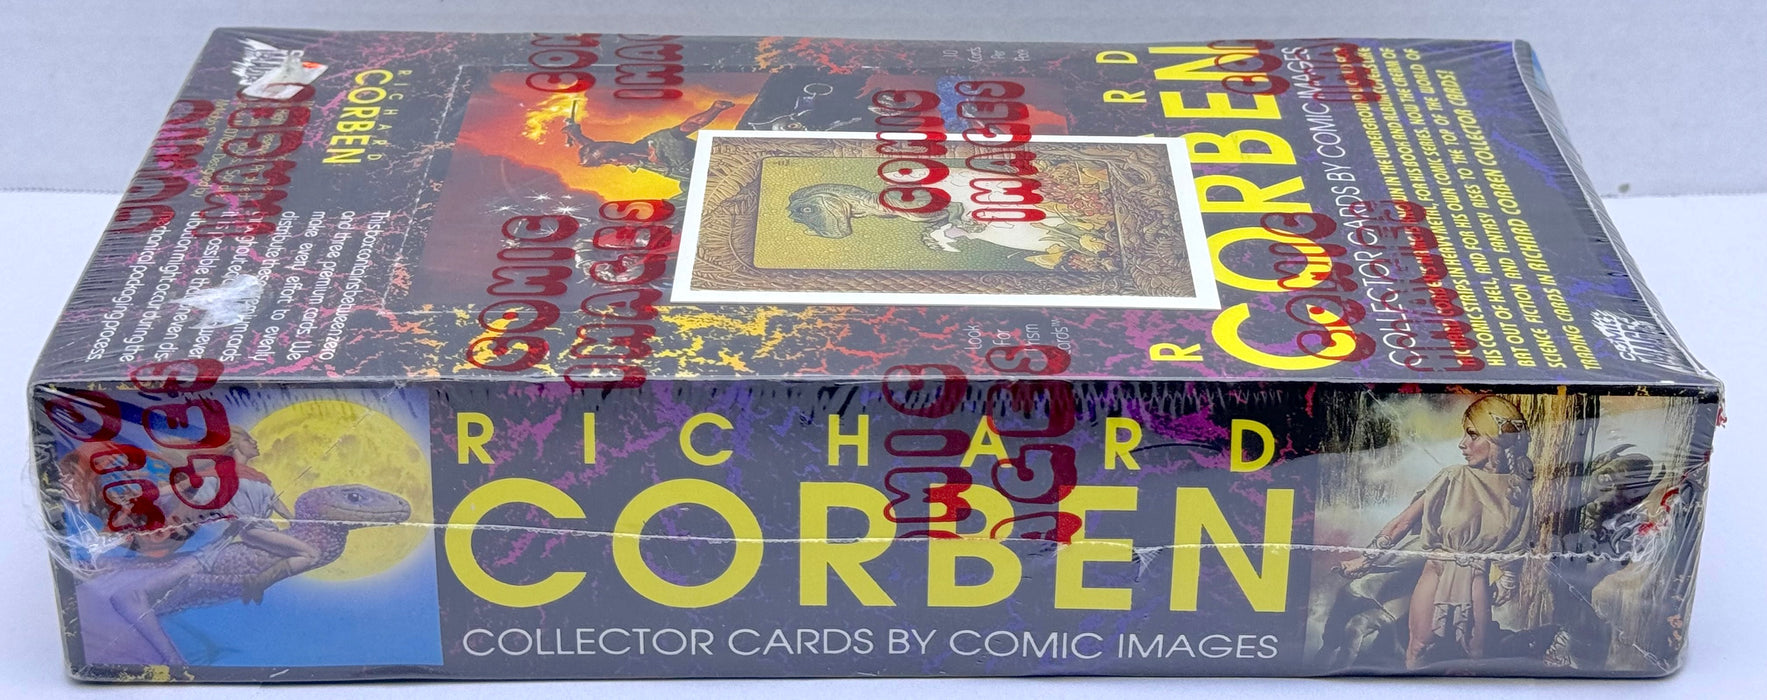 1993 Richard Corben Trading Card Box 48 Packs Comic Images Sealed   - TvMovieCards.com